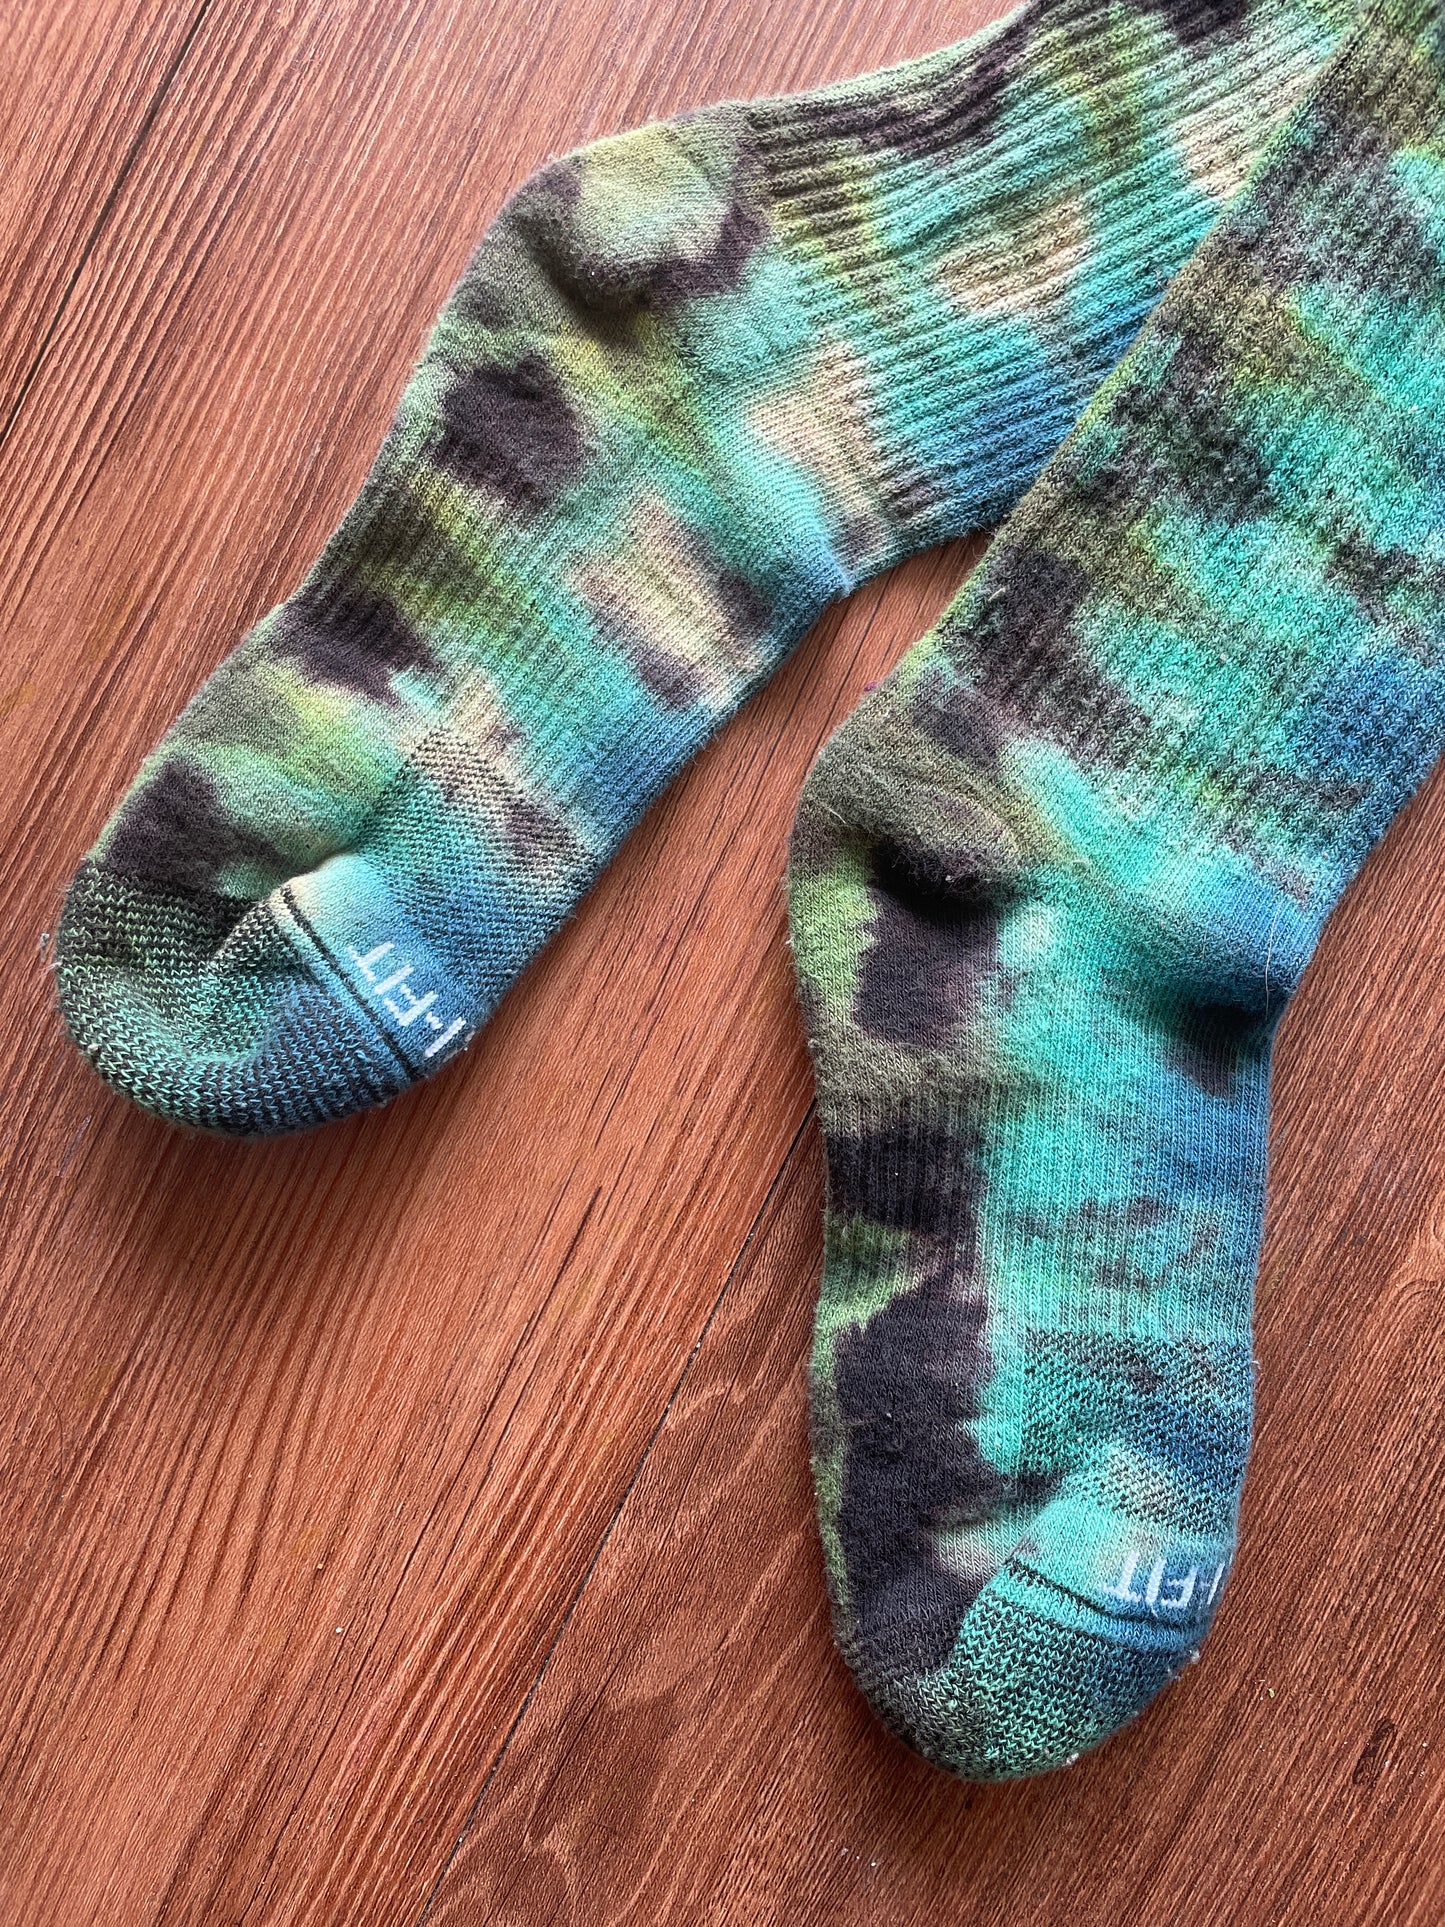 Blue, Teal, and Black Reverse Tie Dye Nike Dri-FIT Training Socks - Size Medium (Men's 6-8/Women's 7-10)